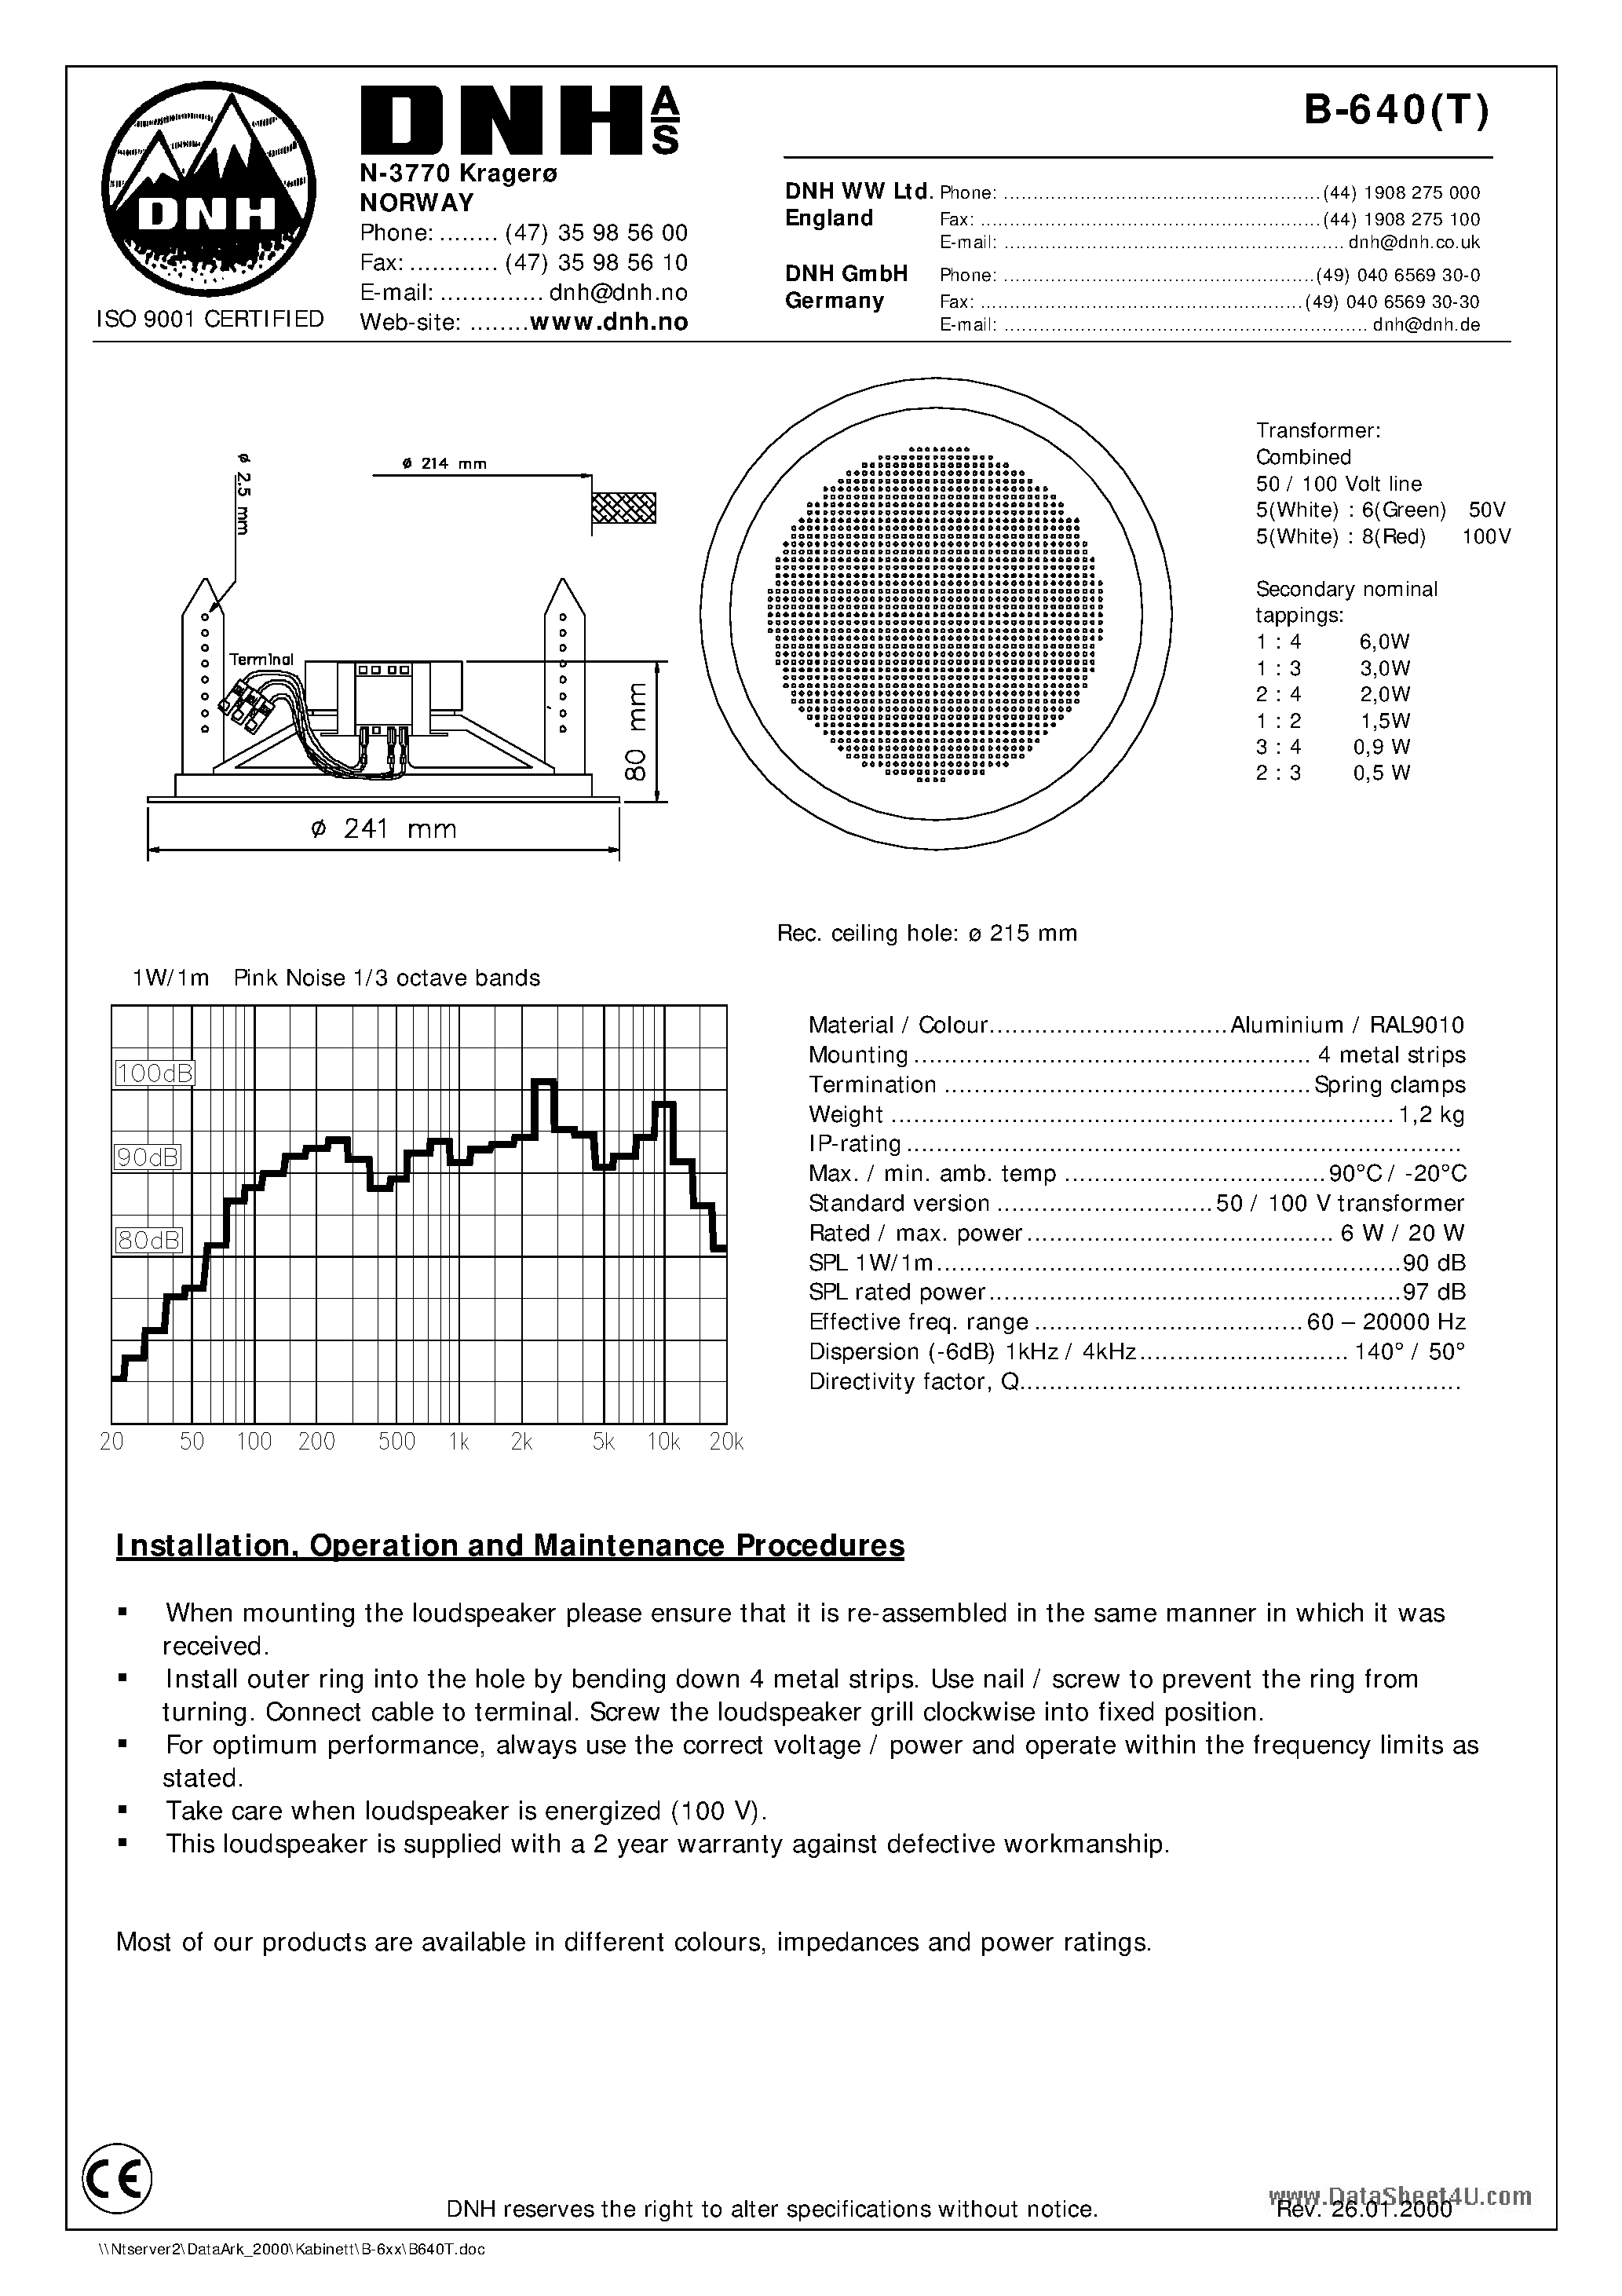 Datasheet B-640 - Installation / Operation and Maintenance Procedures page 1